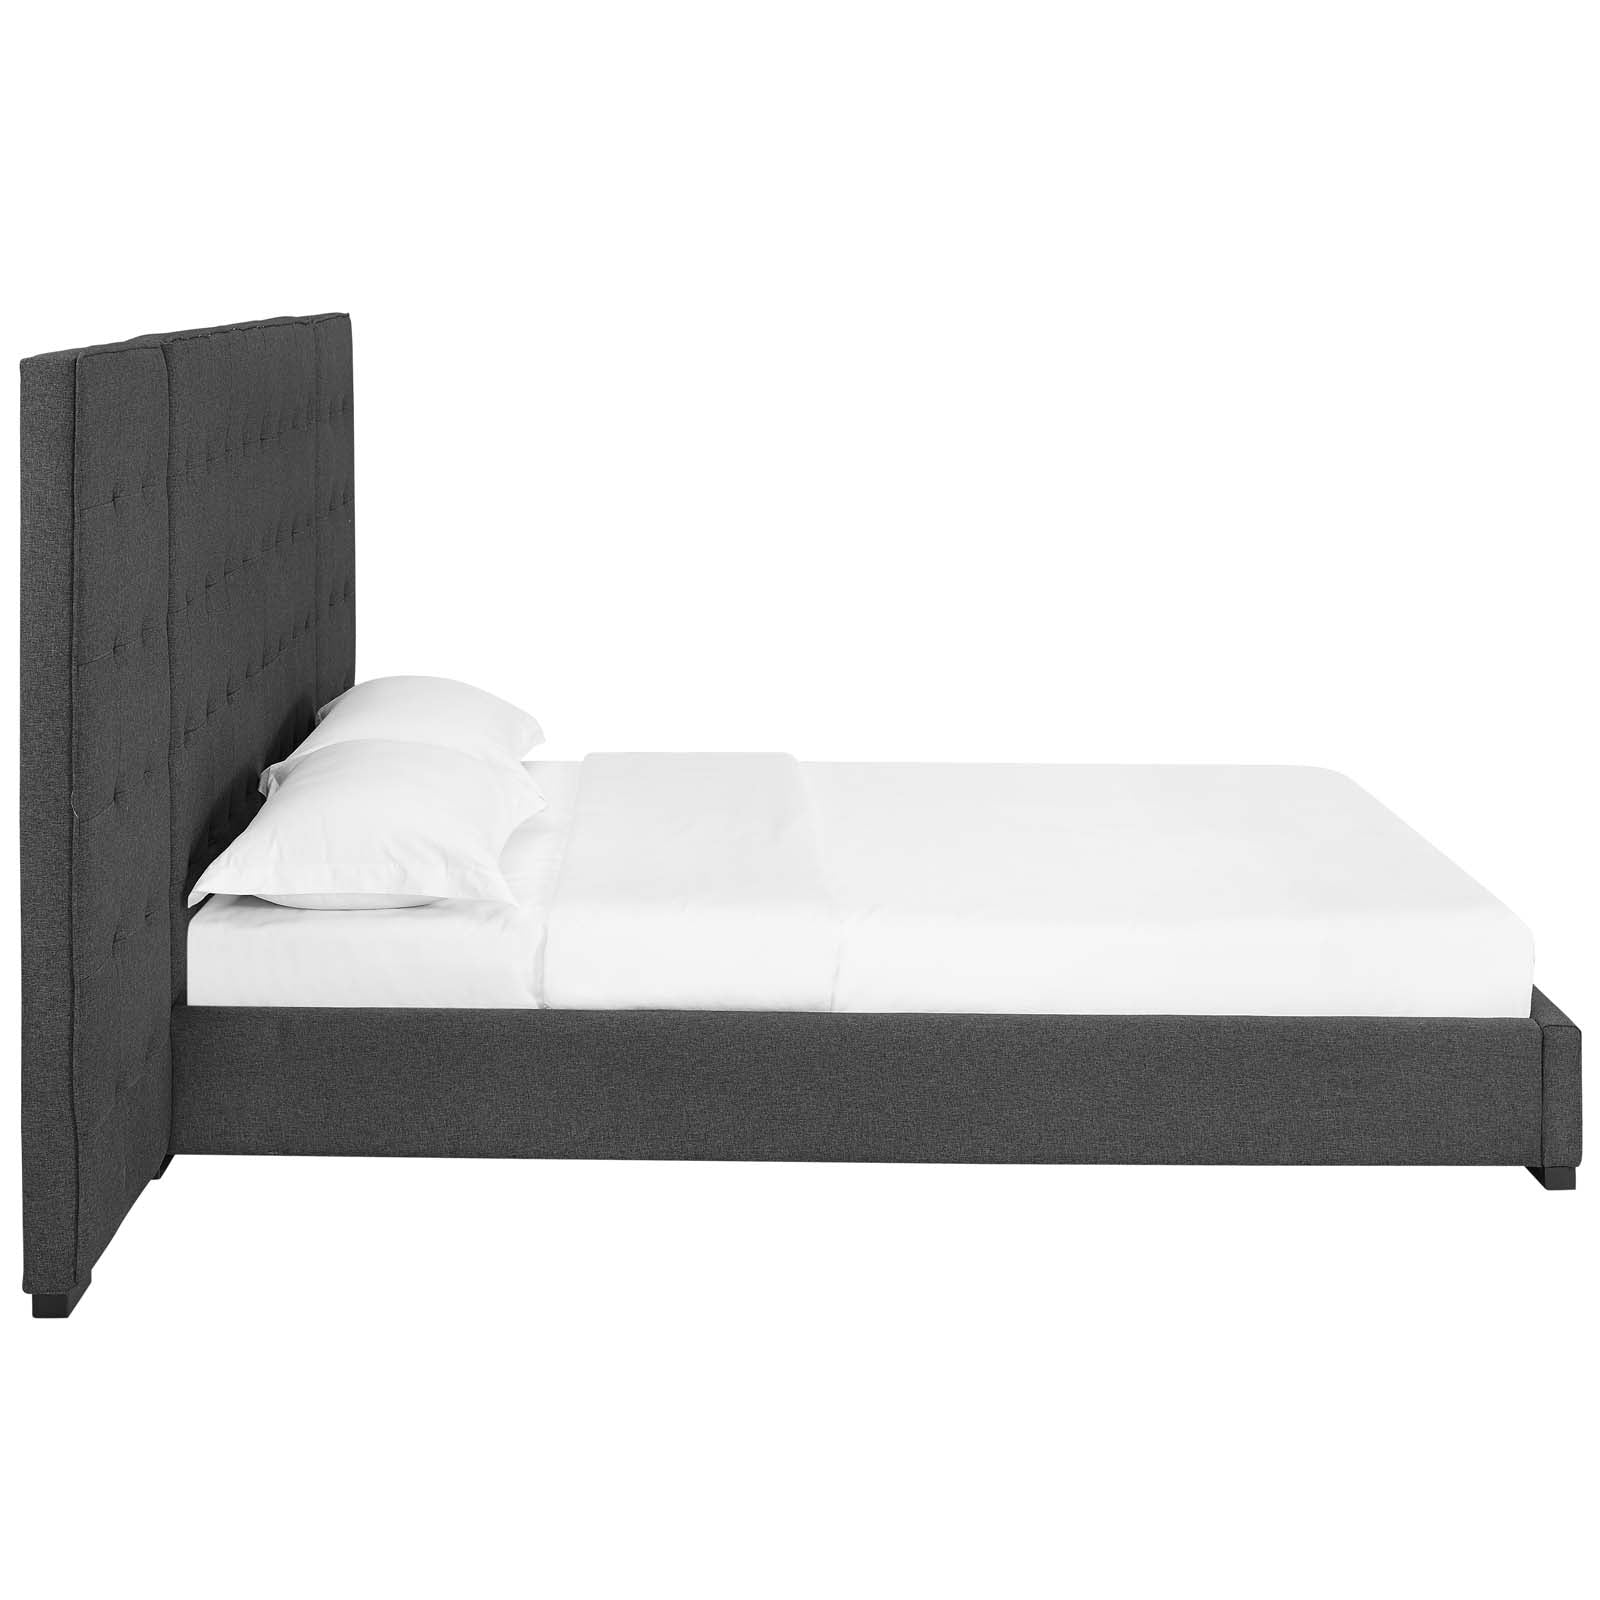 Sierra Queen Upholstered Fabric Platform Bed